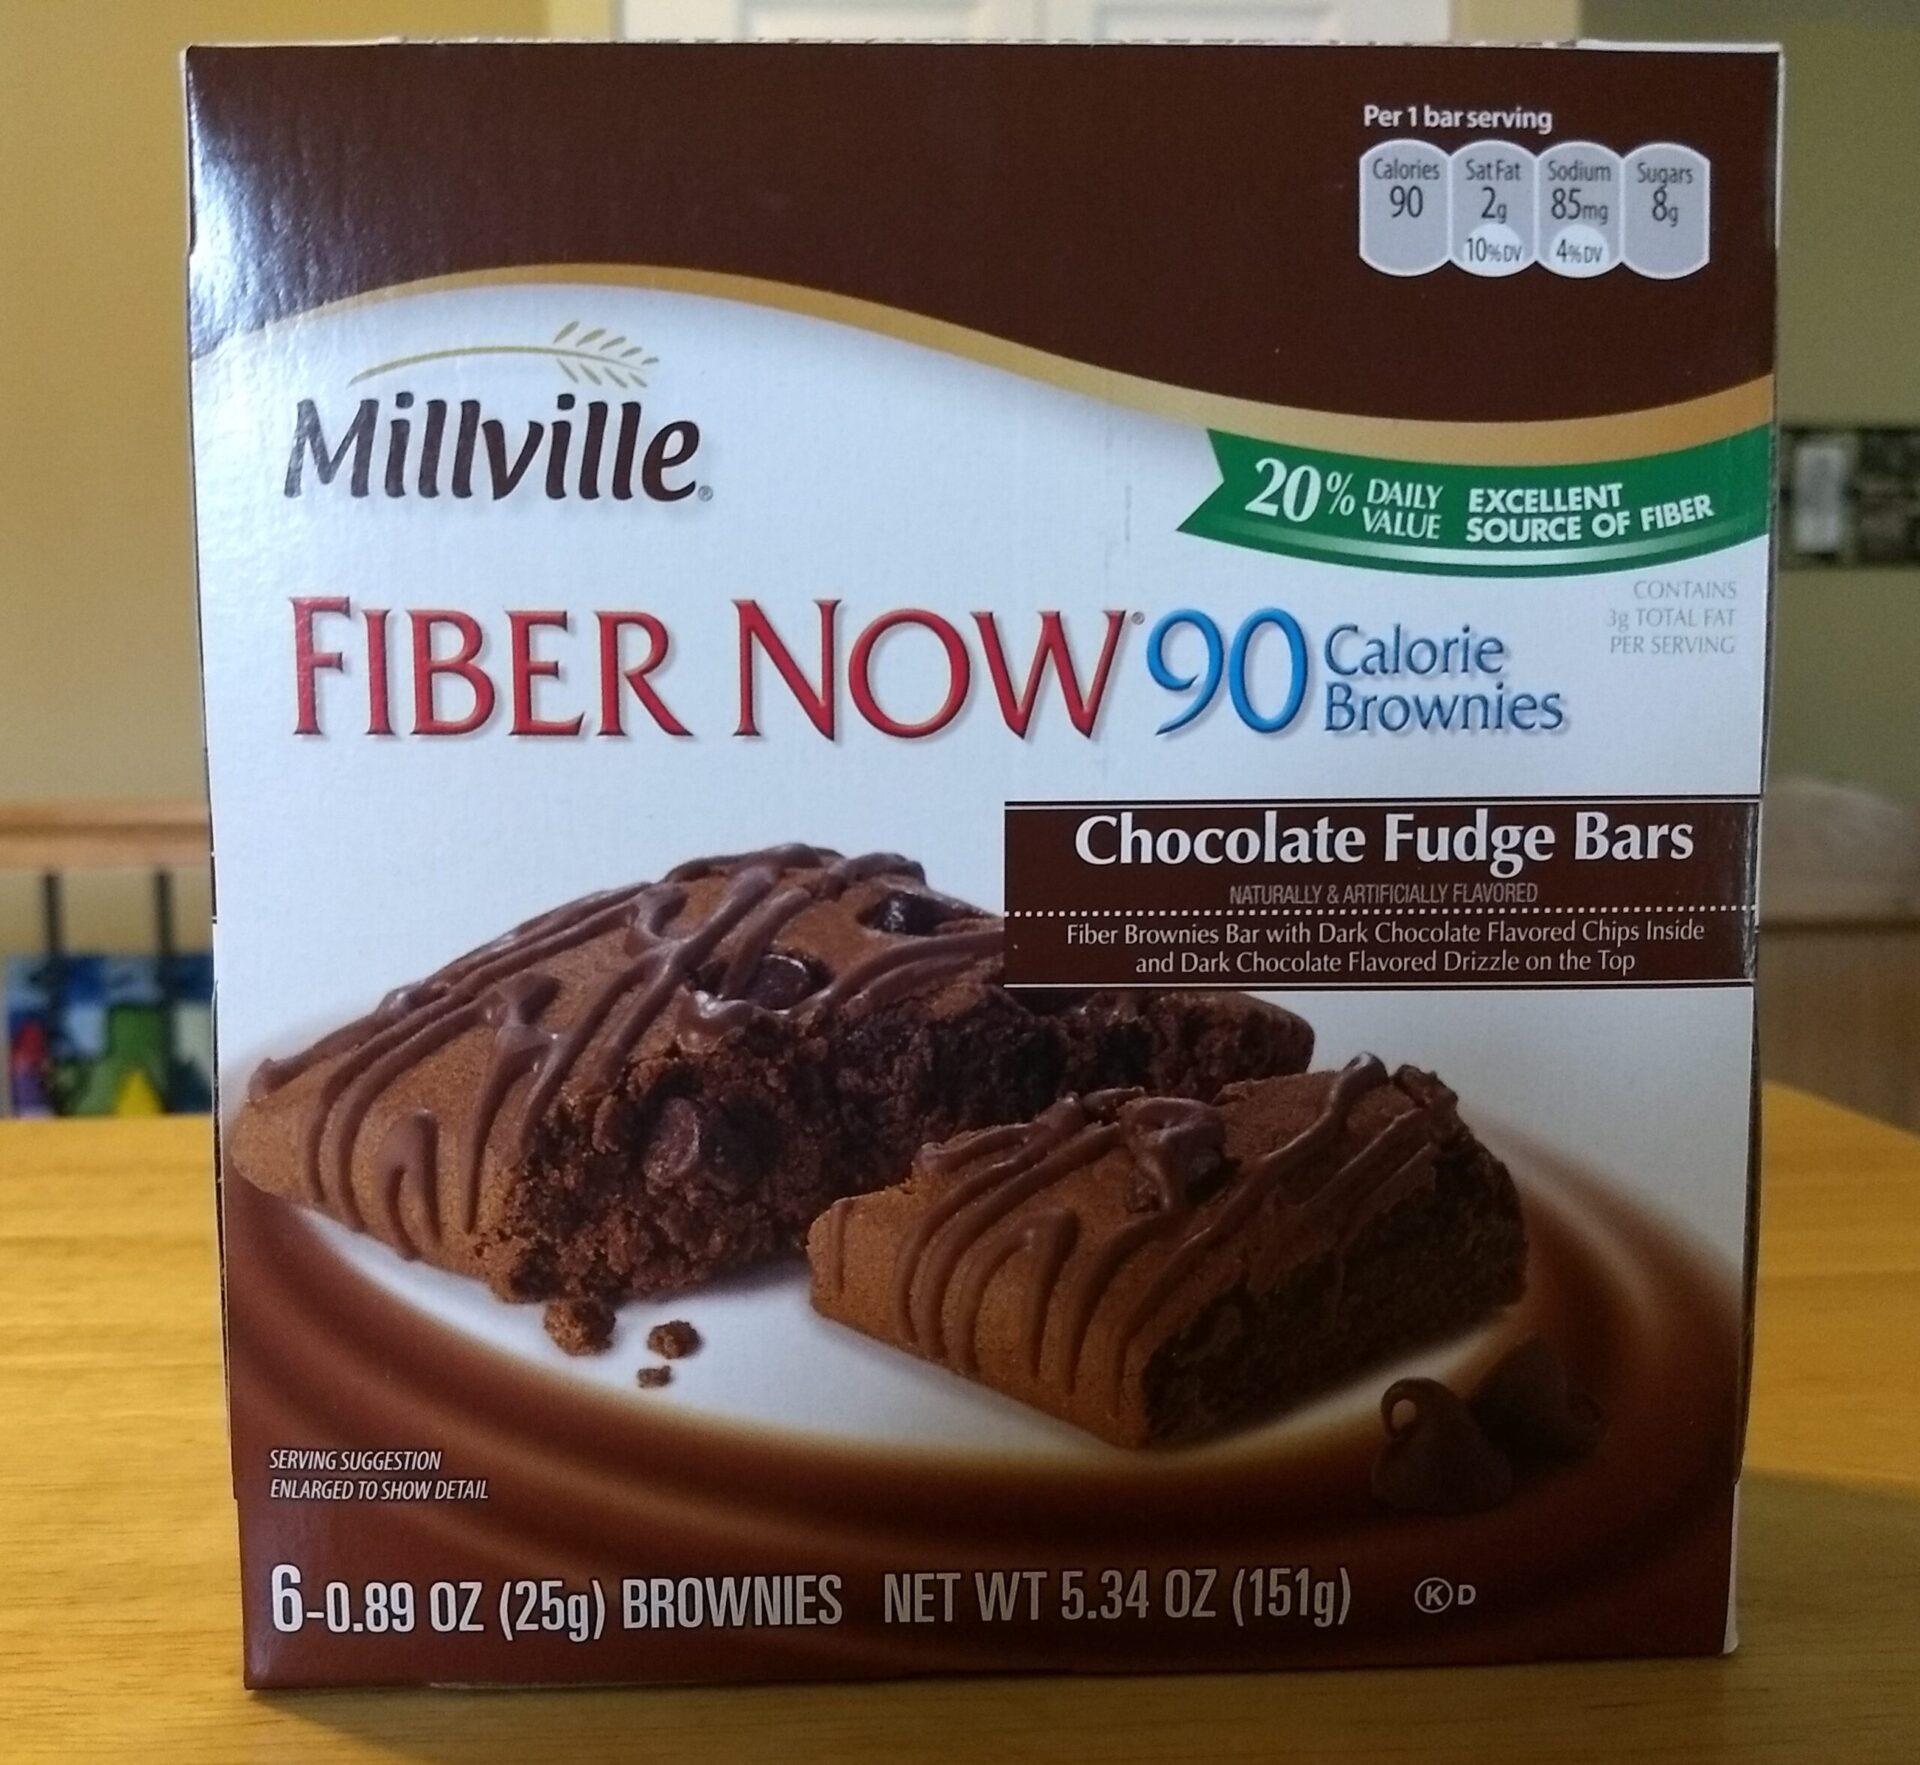 Millville Fiber Now 90 Calorie Chocolate Fudge Bars